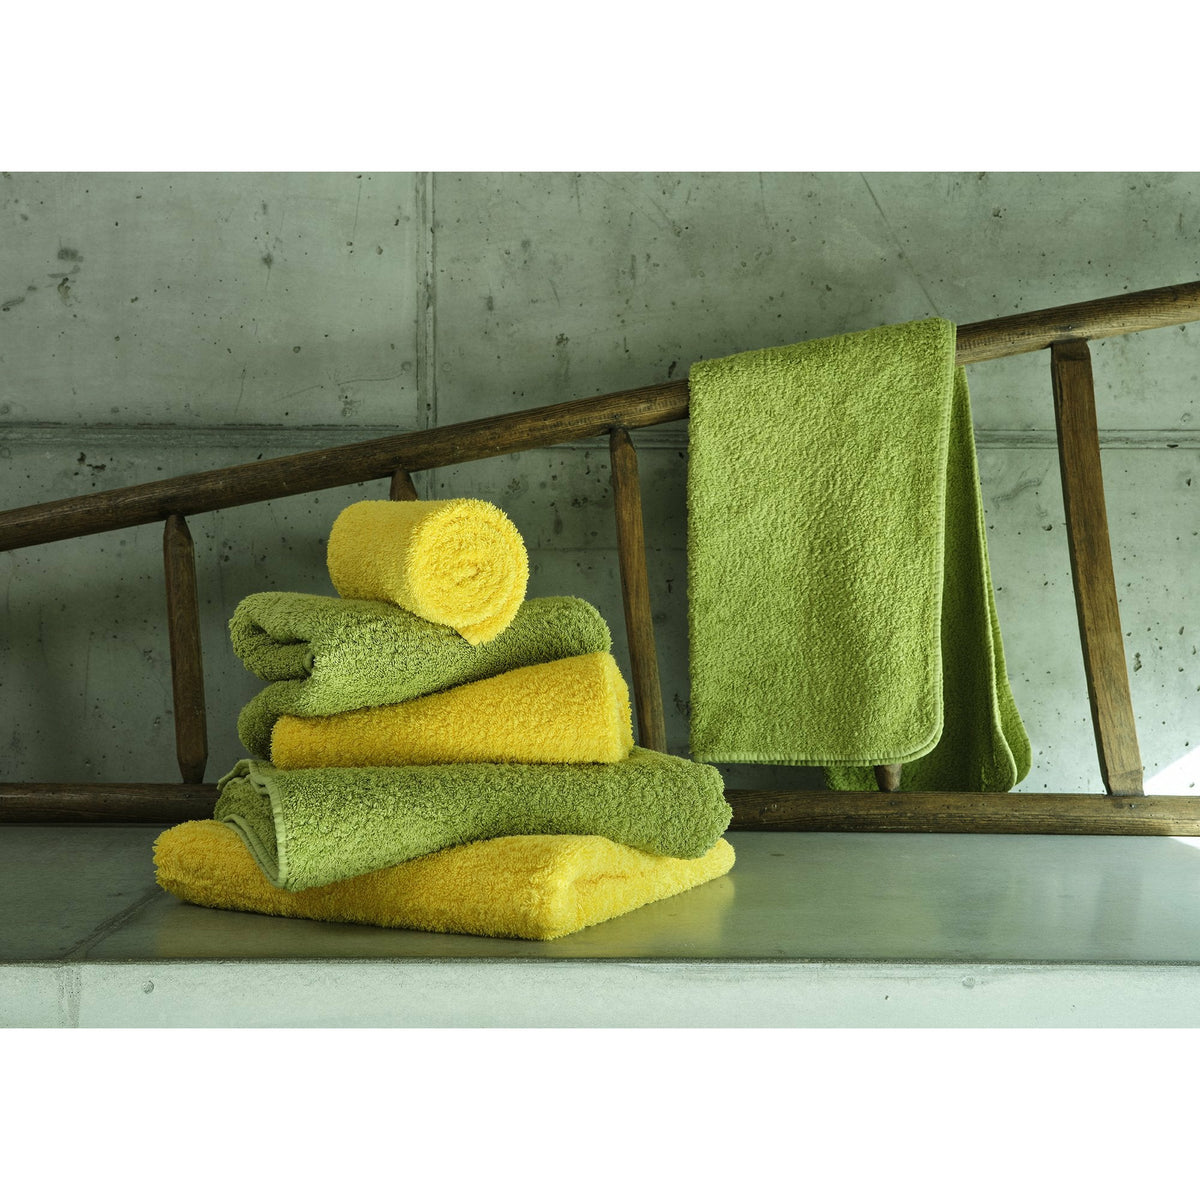 Abyss Super Pile Towels - Bath Towel 28x54 Marina 304